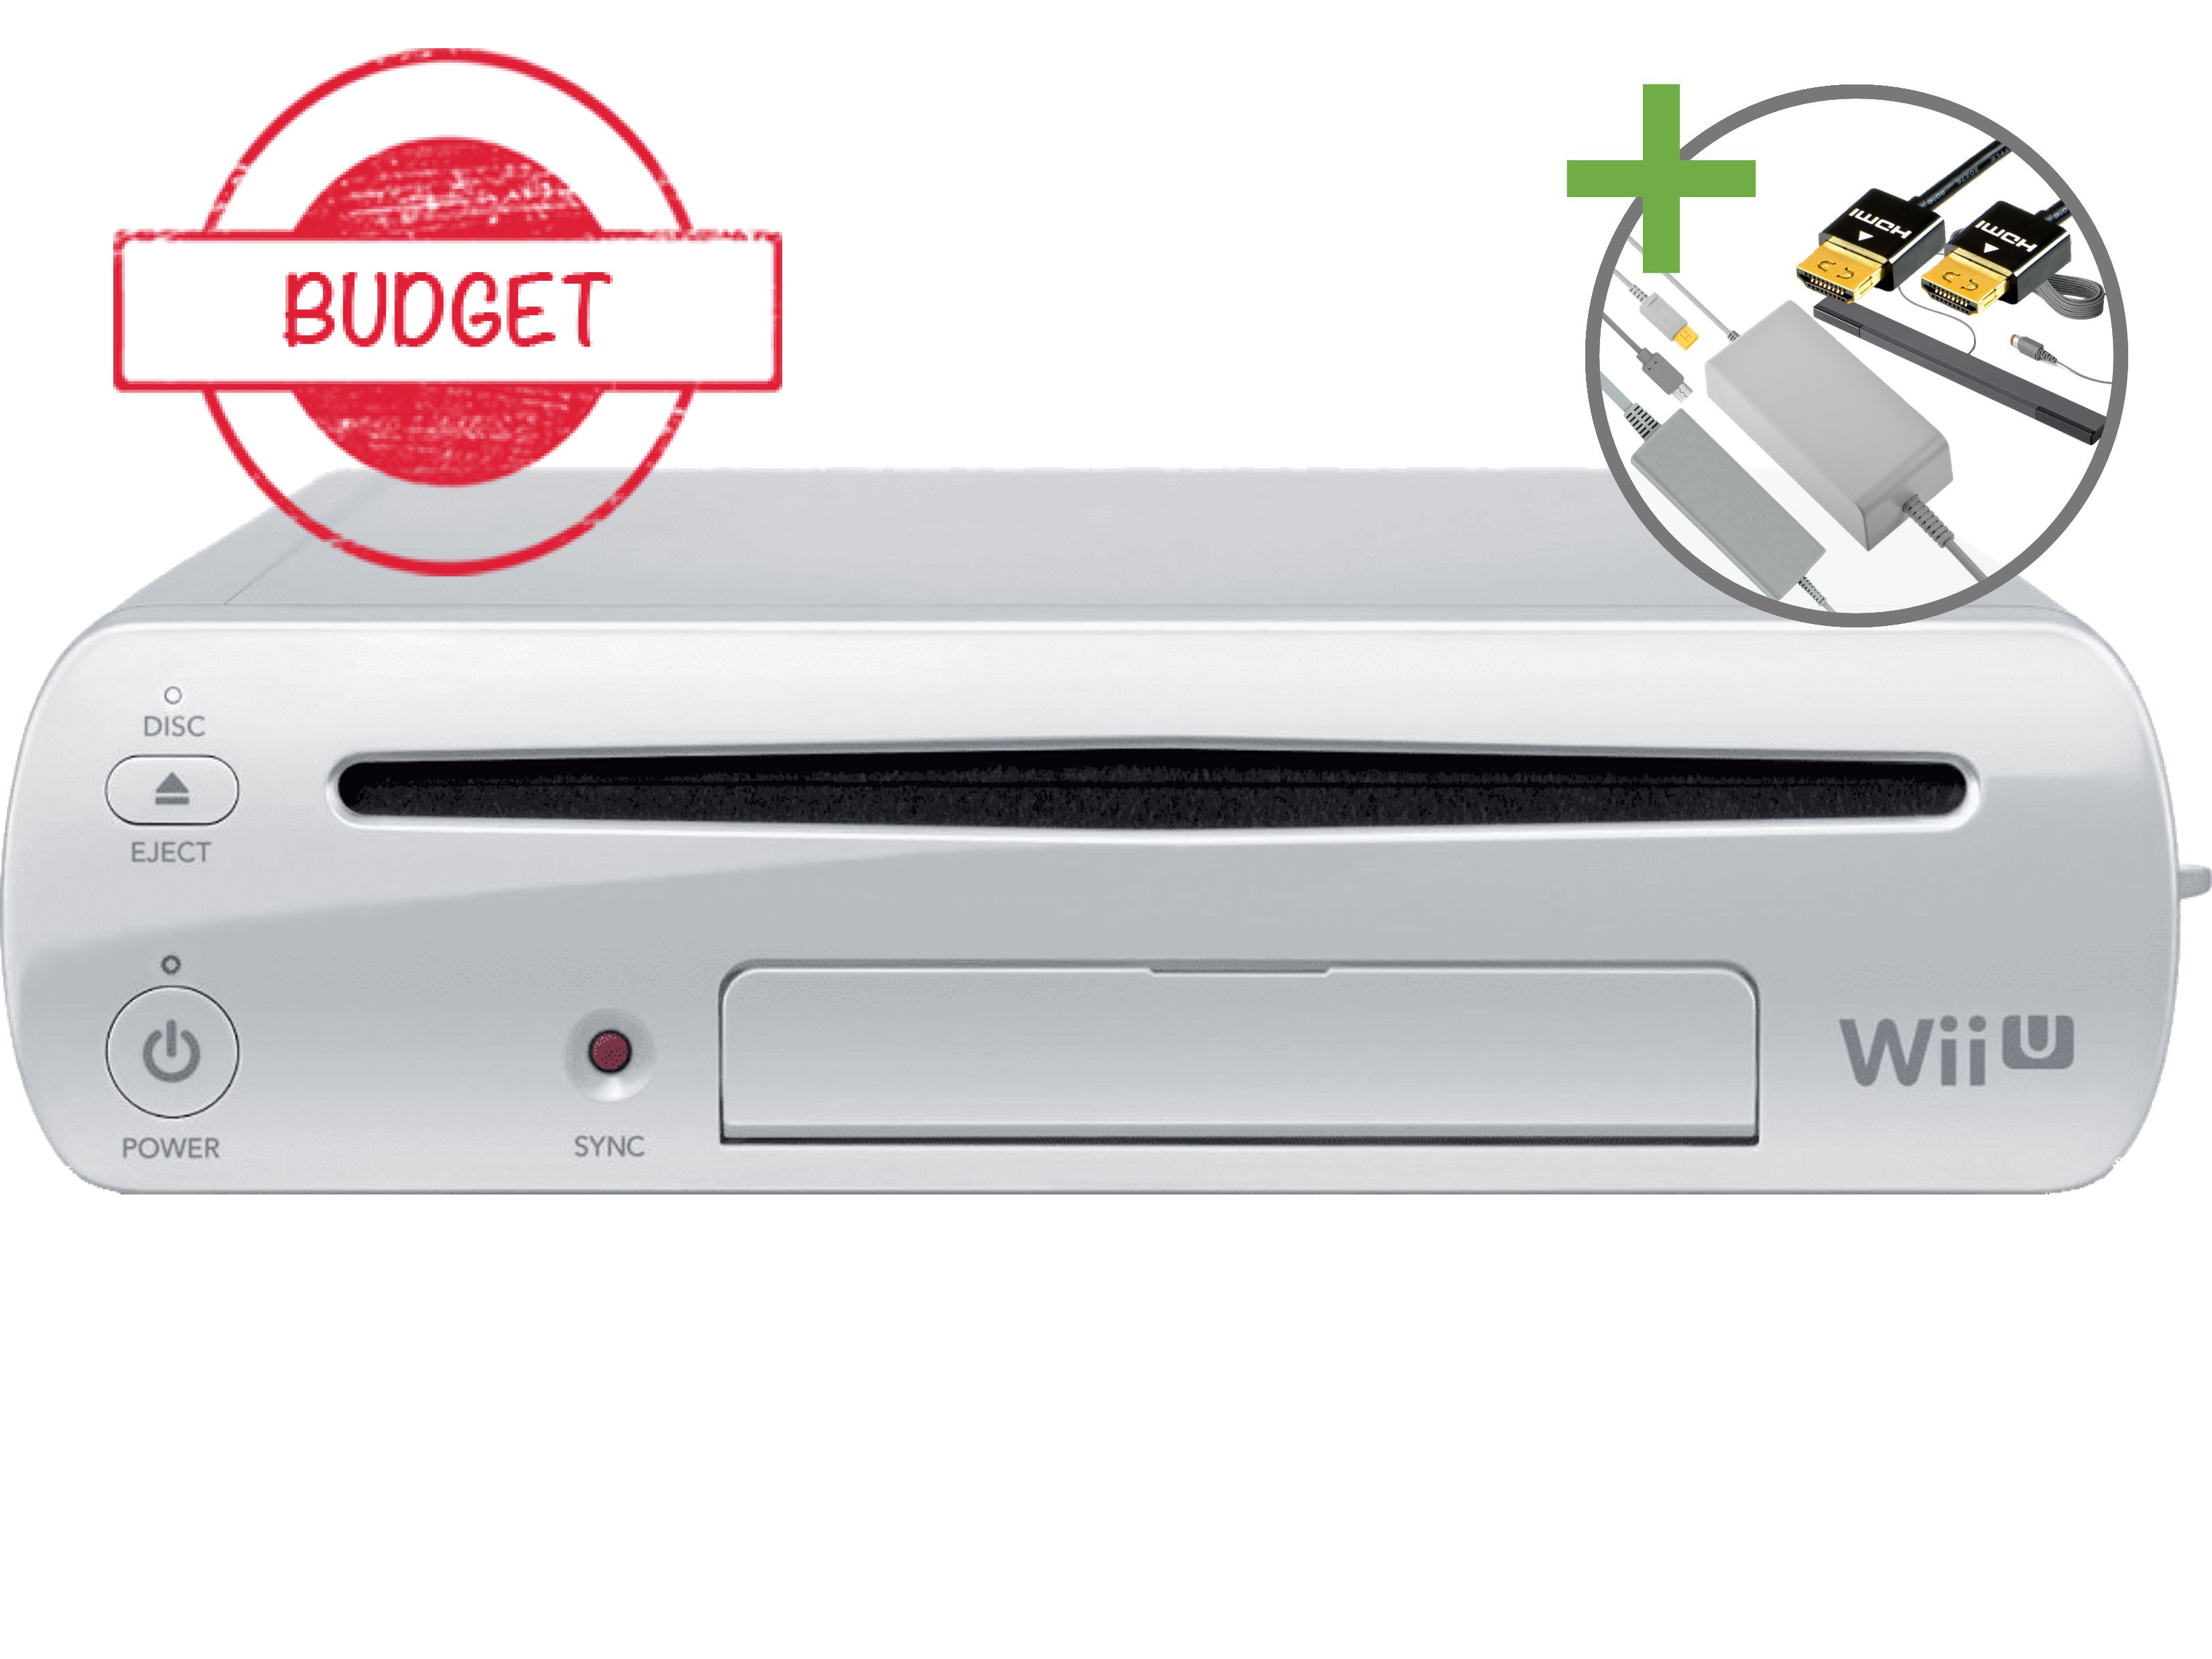 Nintendo Wii U Starter Pack - Just Dance 2014 Edition - Budget - Wii U Hardware - 3